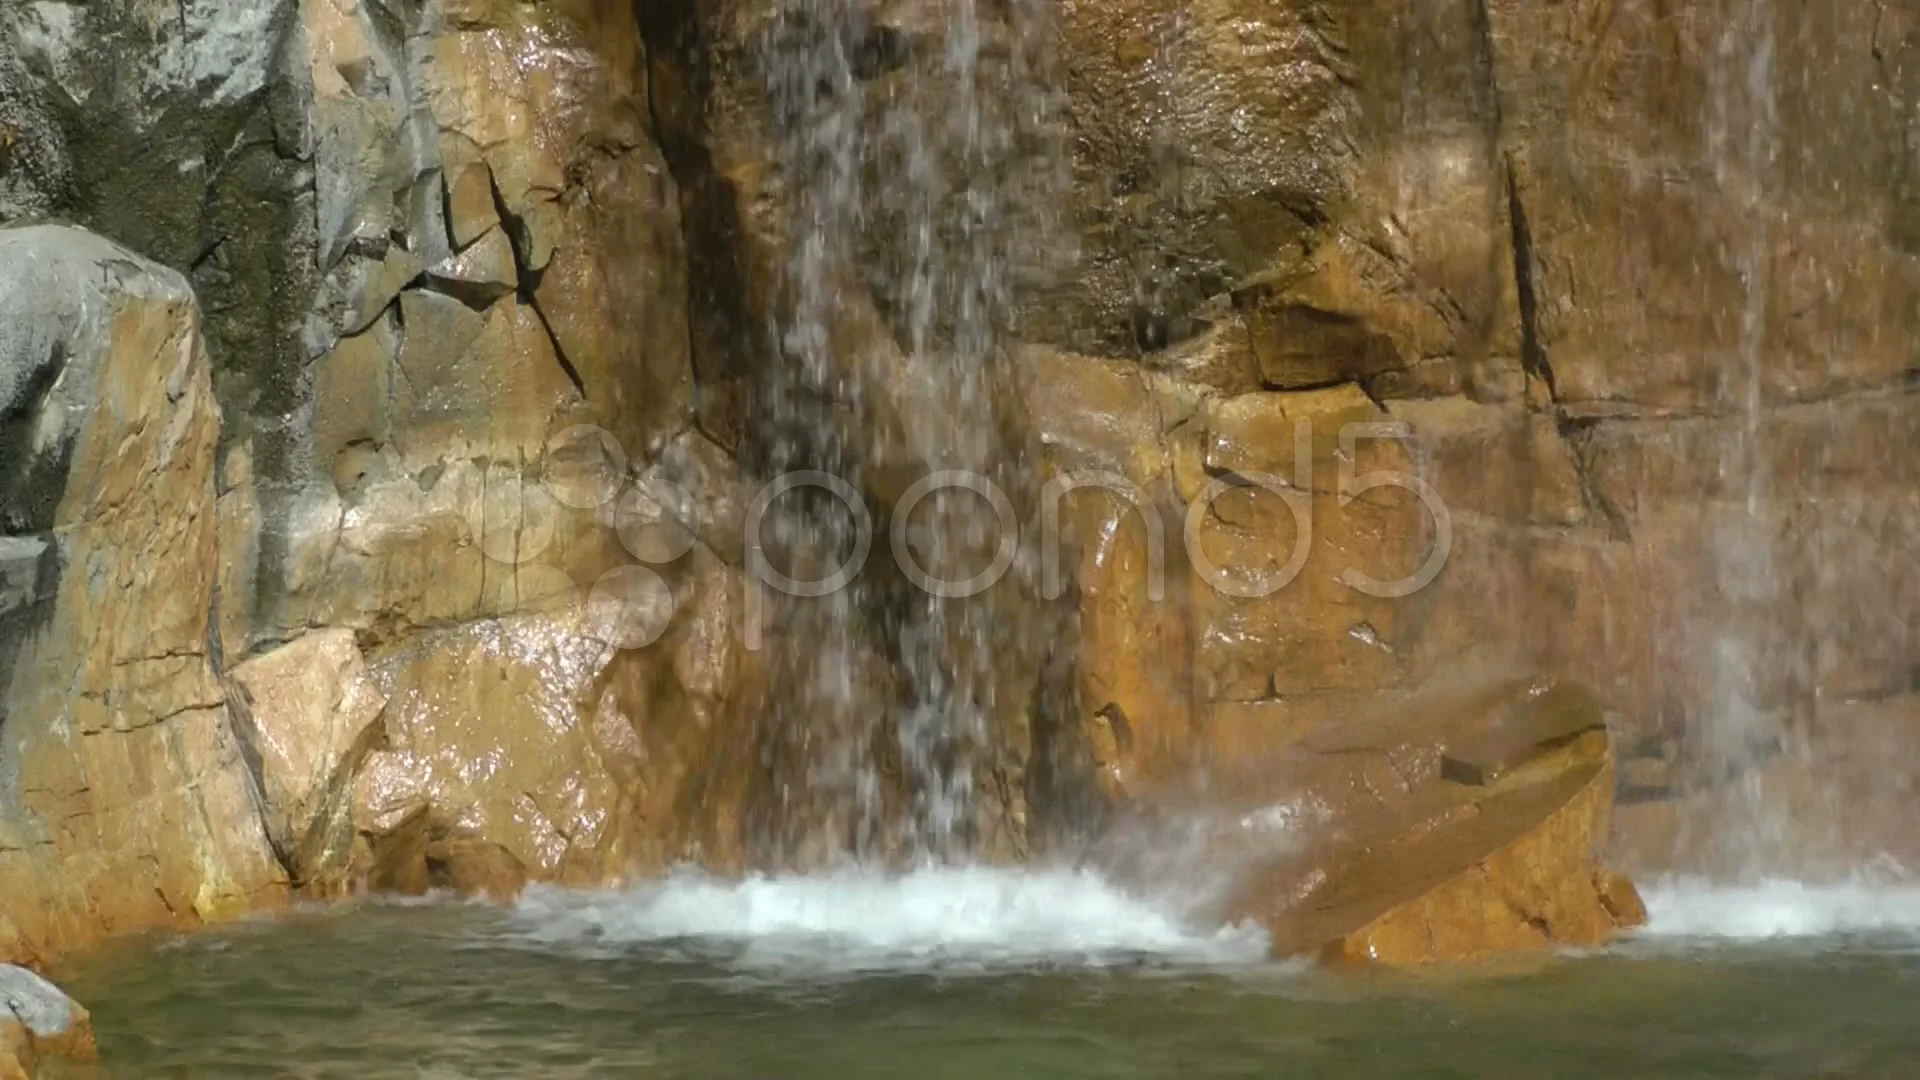 waterfall hd videos 1080p